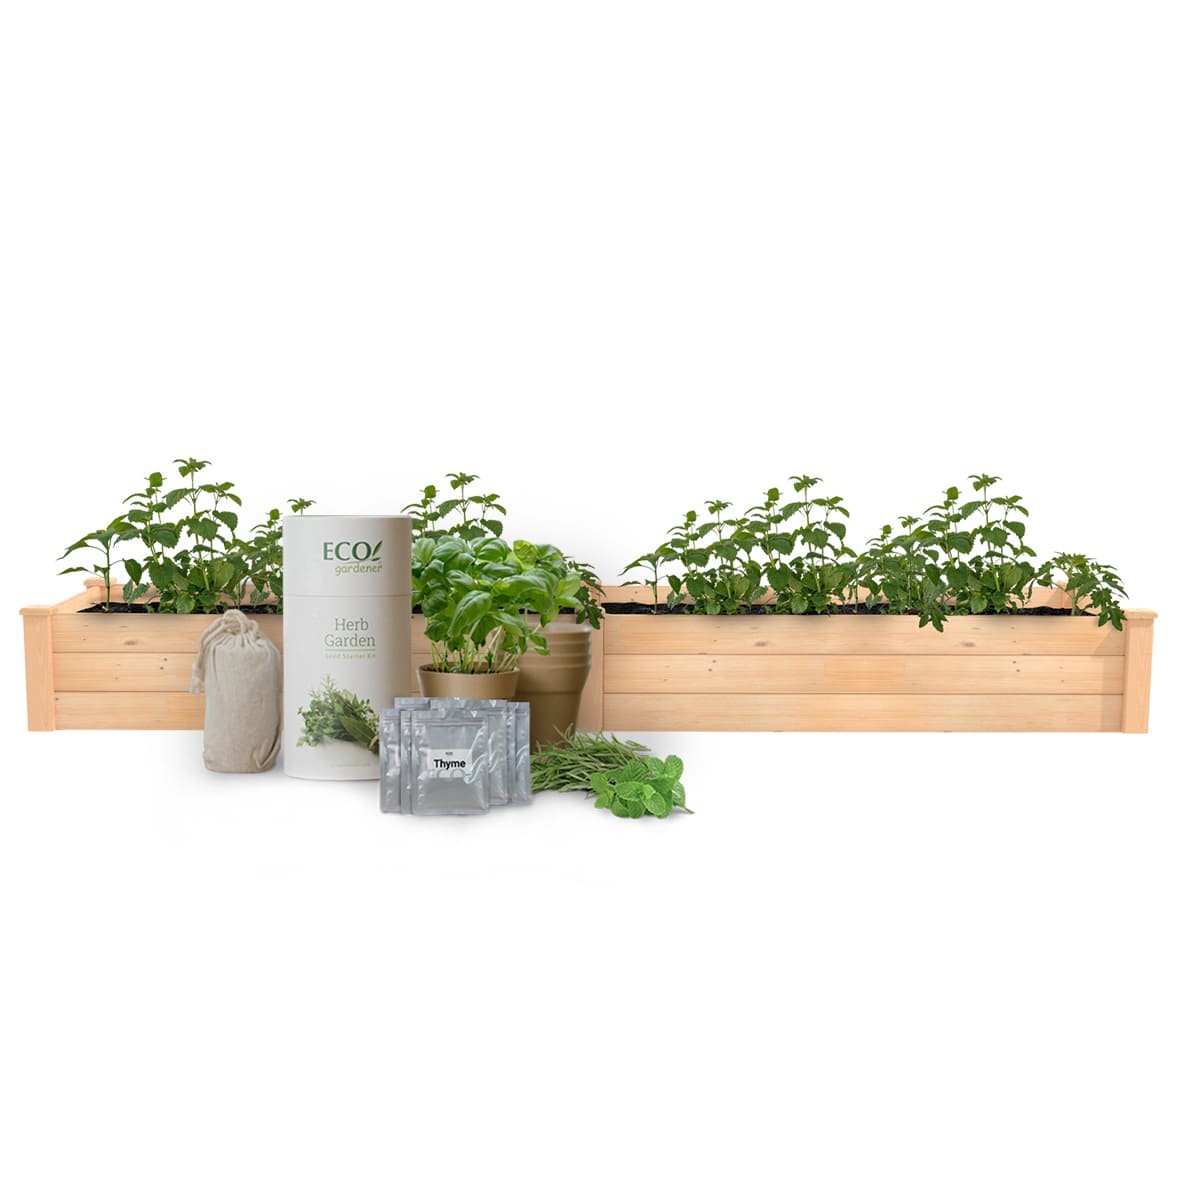 ECOgardener 2’x8’ Raised Bed Planter Bundle with Herb Garden Kit Starter Pack